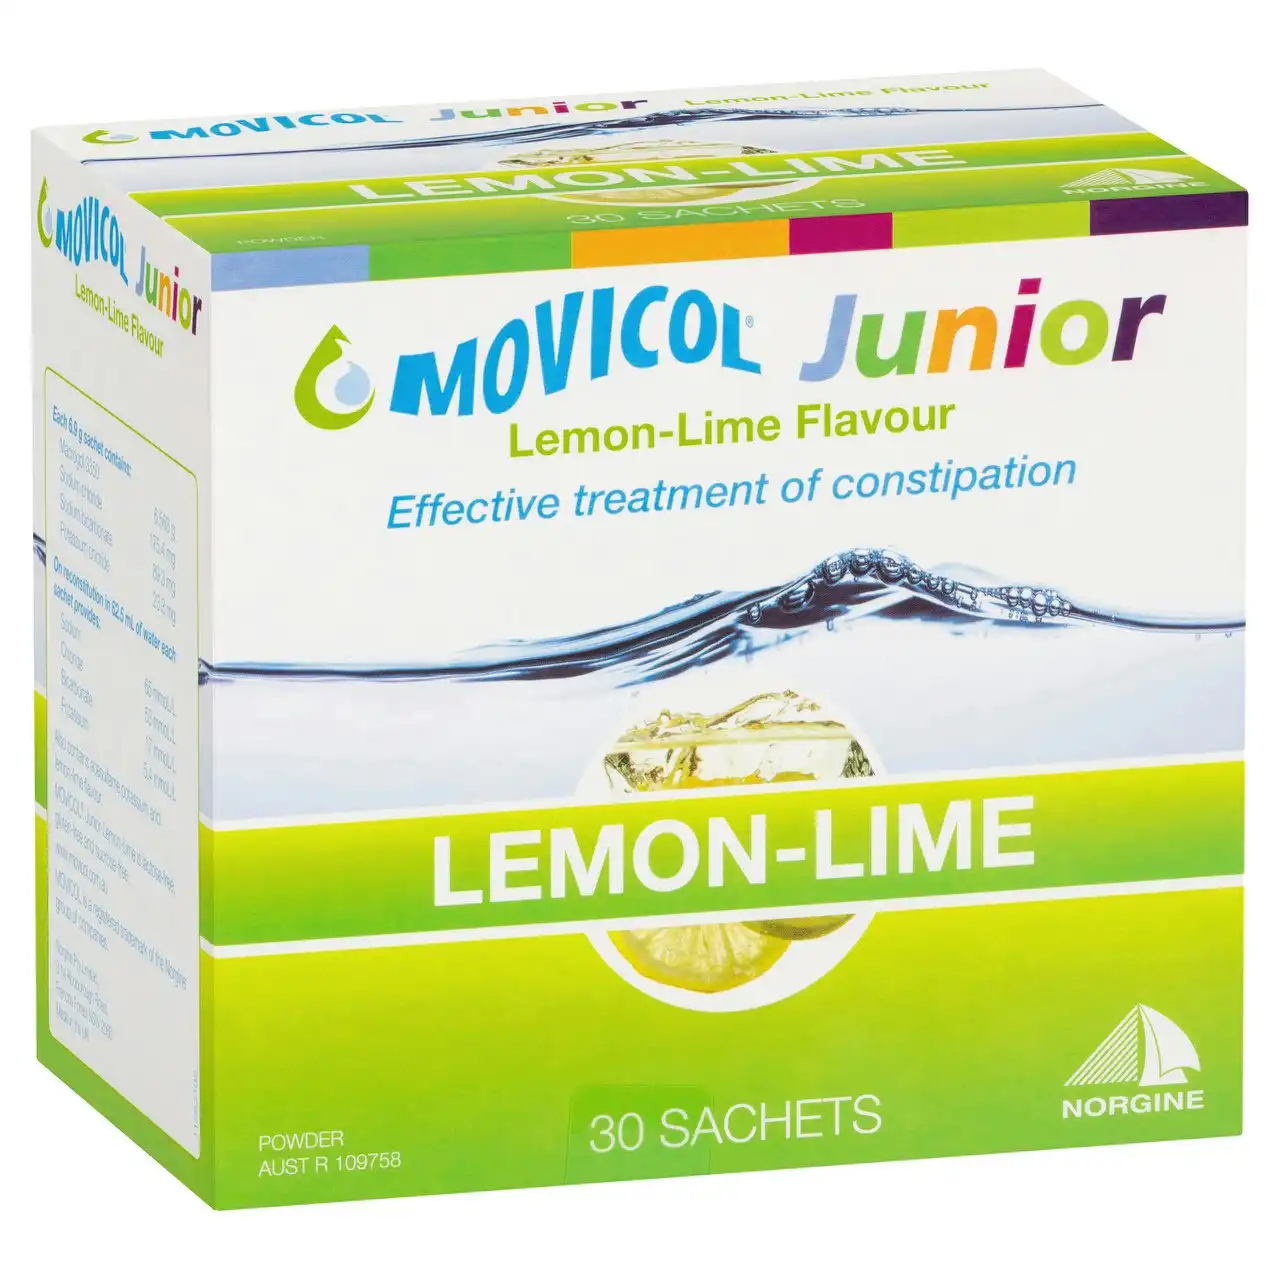 MOVICOL(r) Junior Lemon Lime